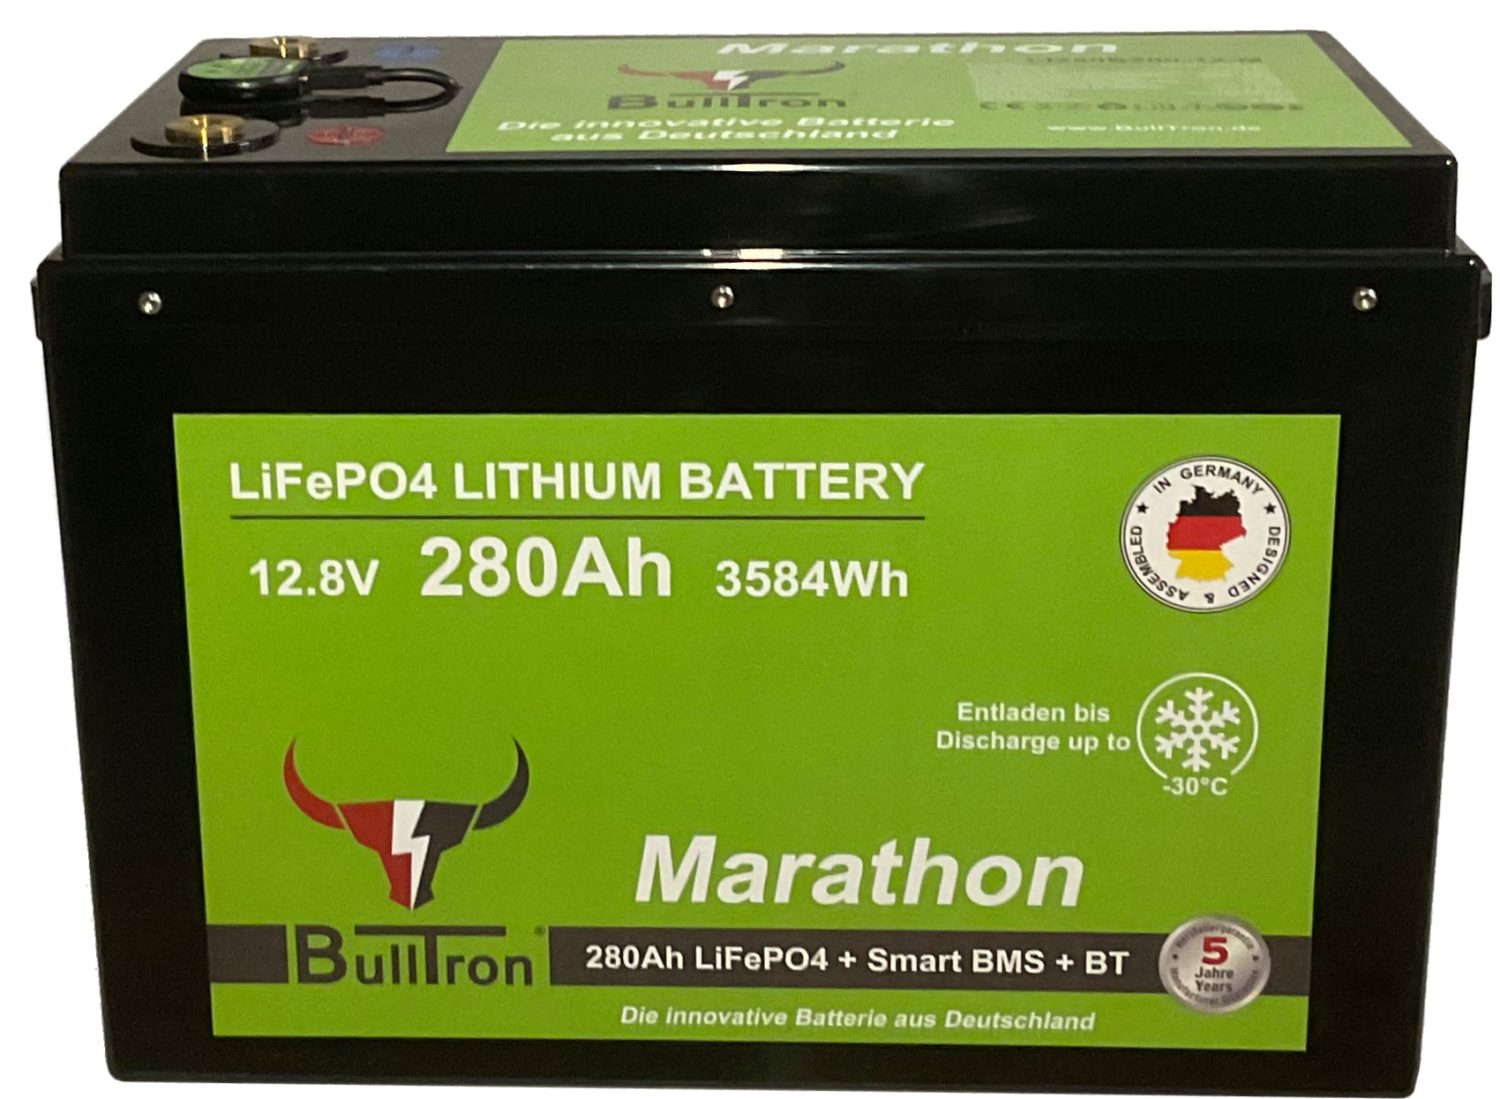 BullTron Batteriewächter 280Ah Marathon Polar LiFePO4 12.8V Akku BMS Bluetooth